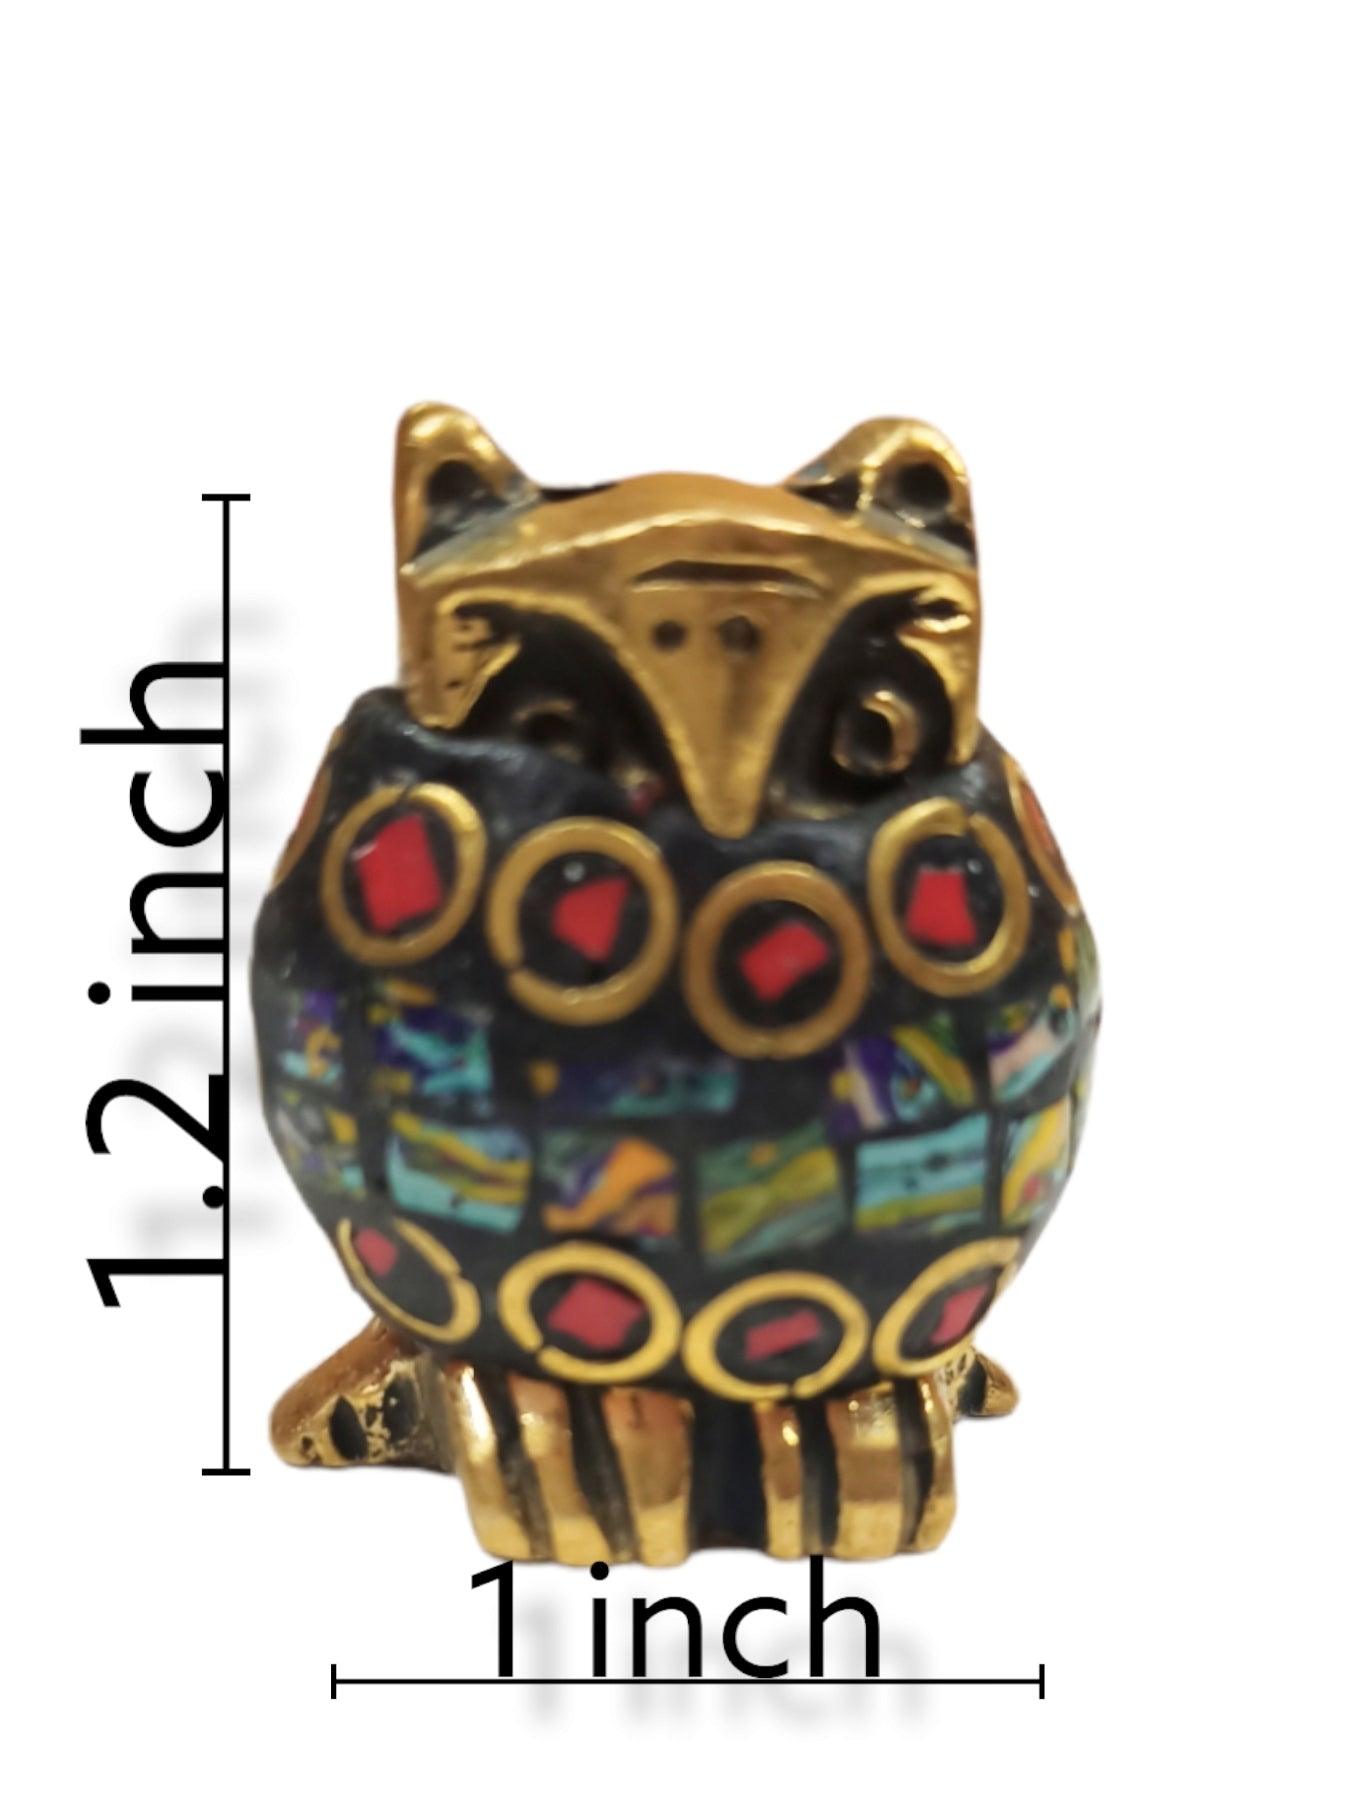 Brass Owl Incense holder | Incense Stick | Home Decor - ZANSKAR ARTS